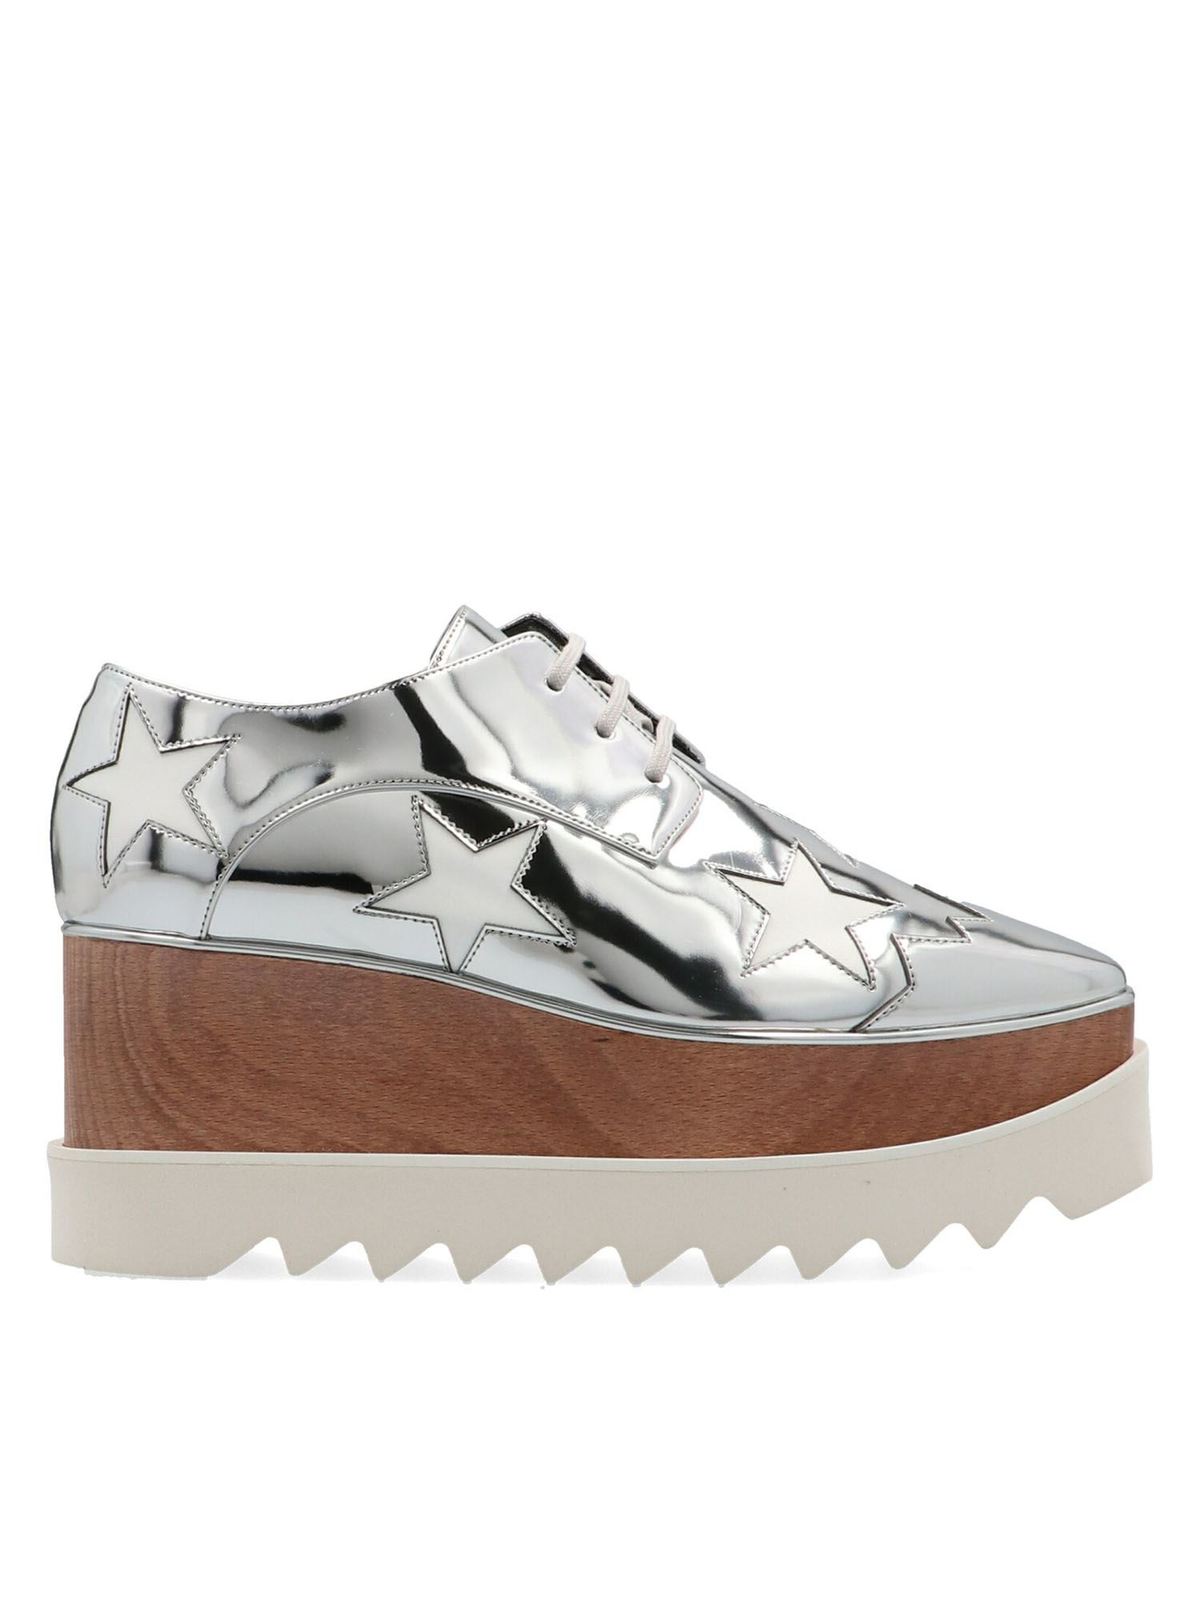 silver platform shoes